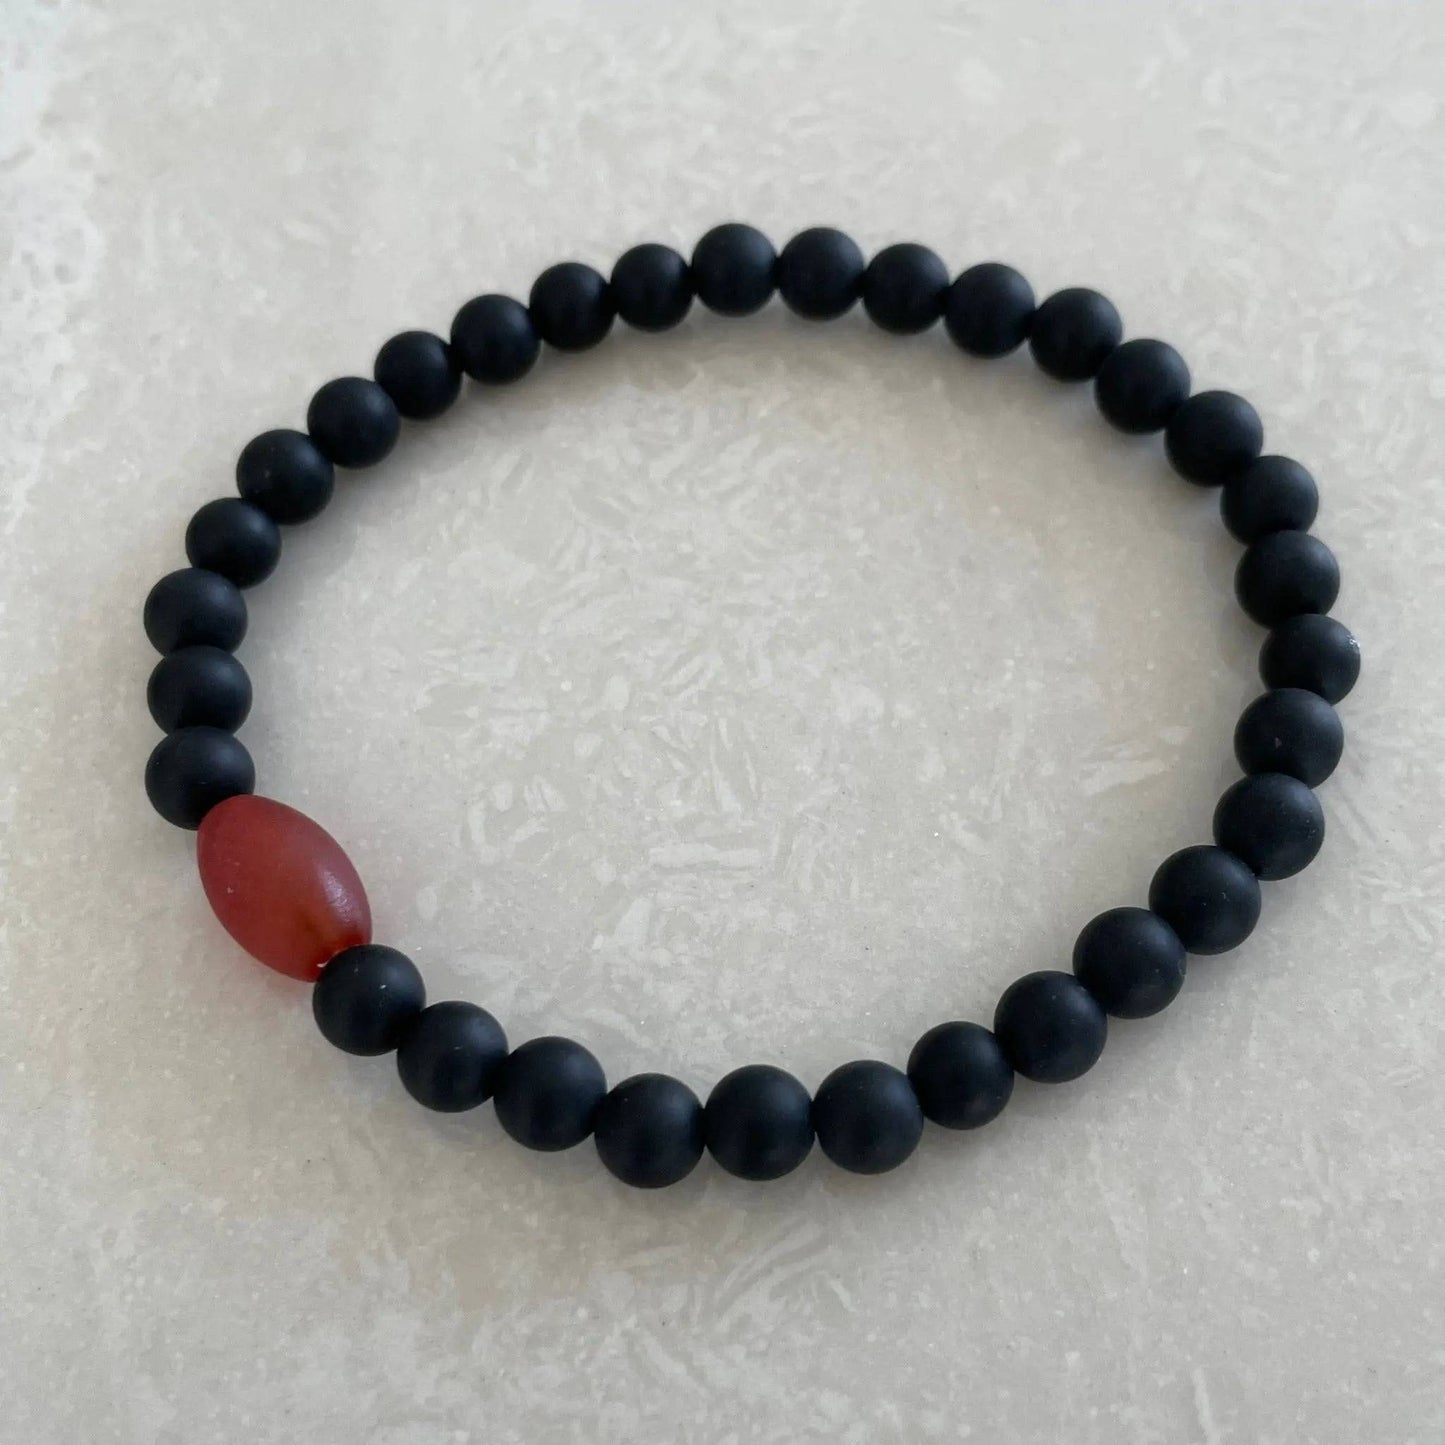 Om (Aum) Bracelet - Black Onyx & Red Agate - Uplift Beads